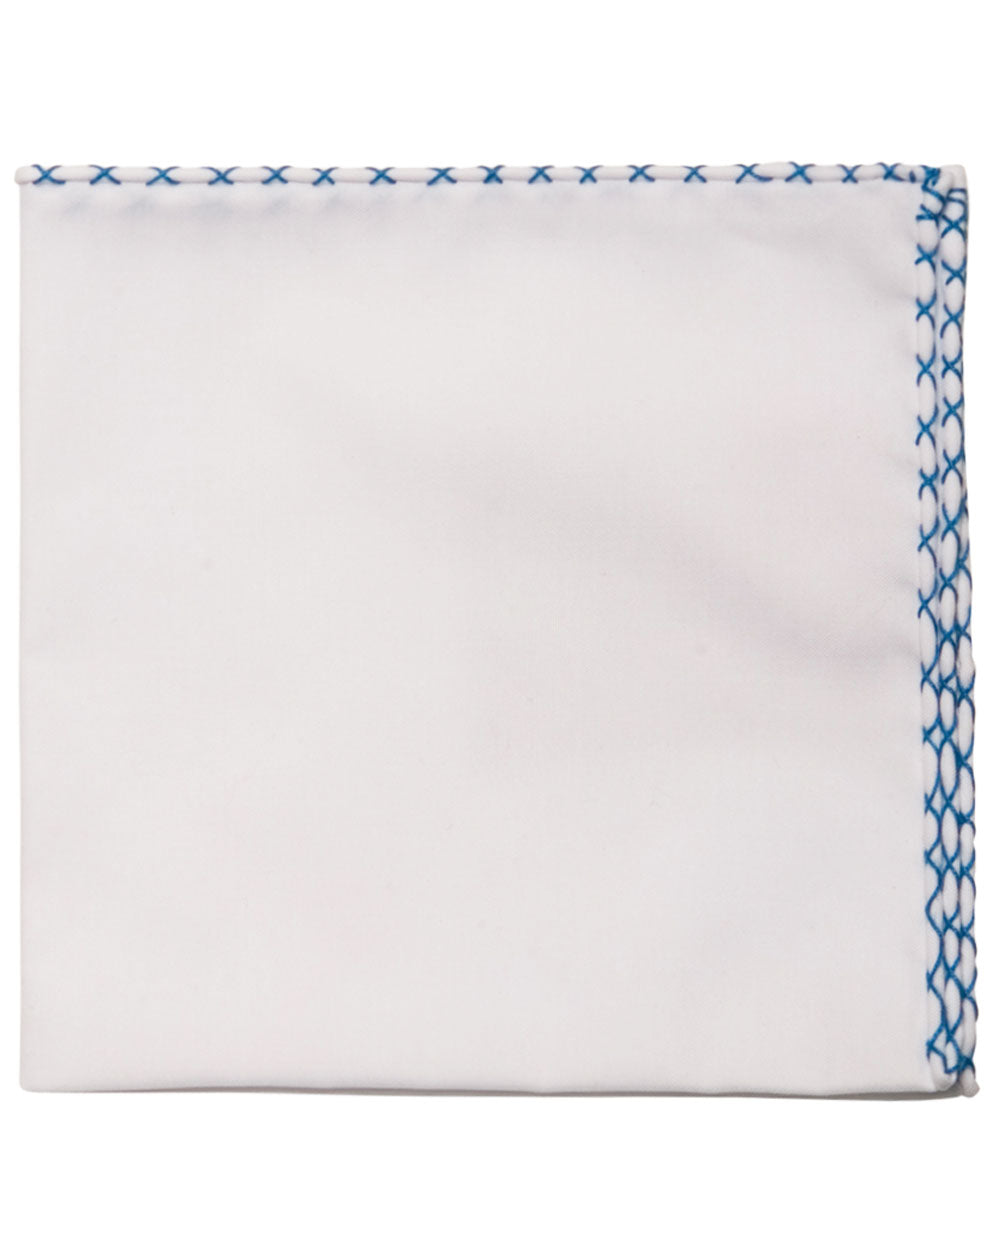 White and Blue Hem Pocket Square